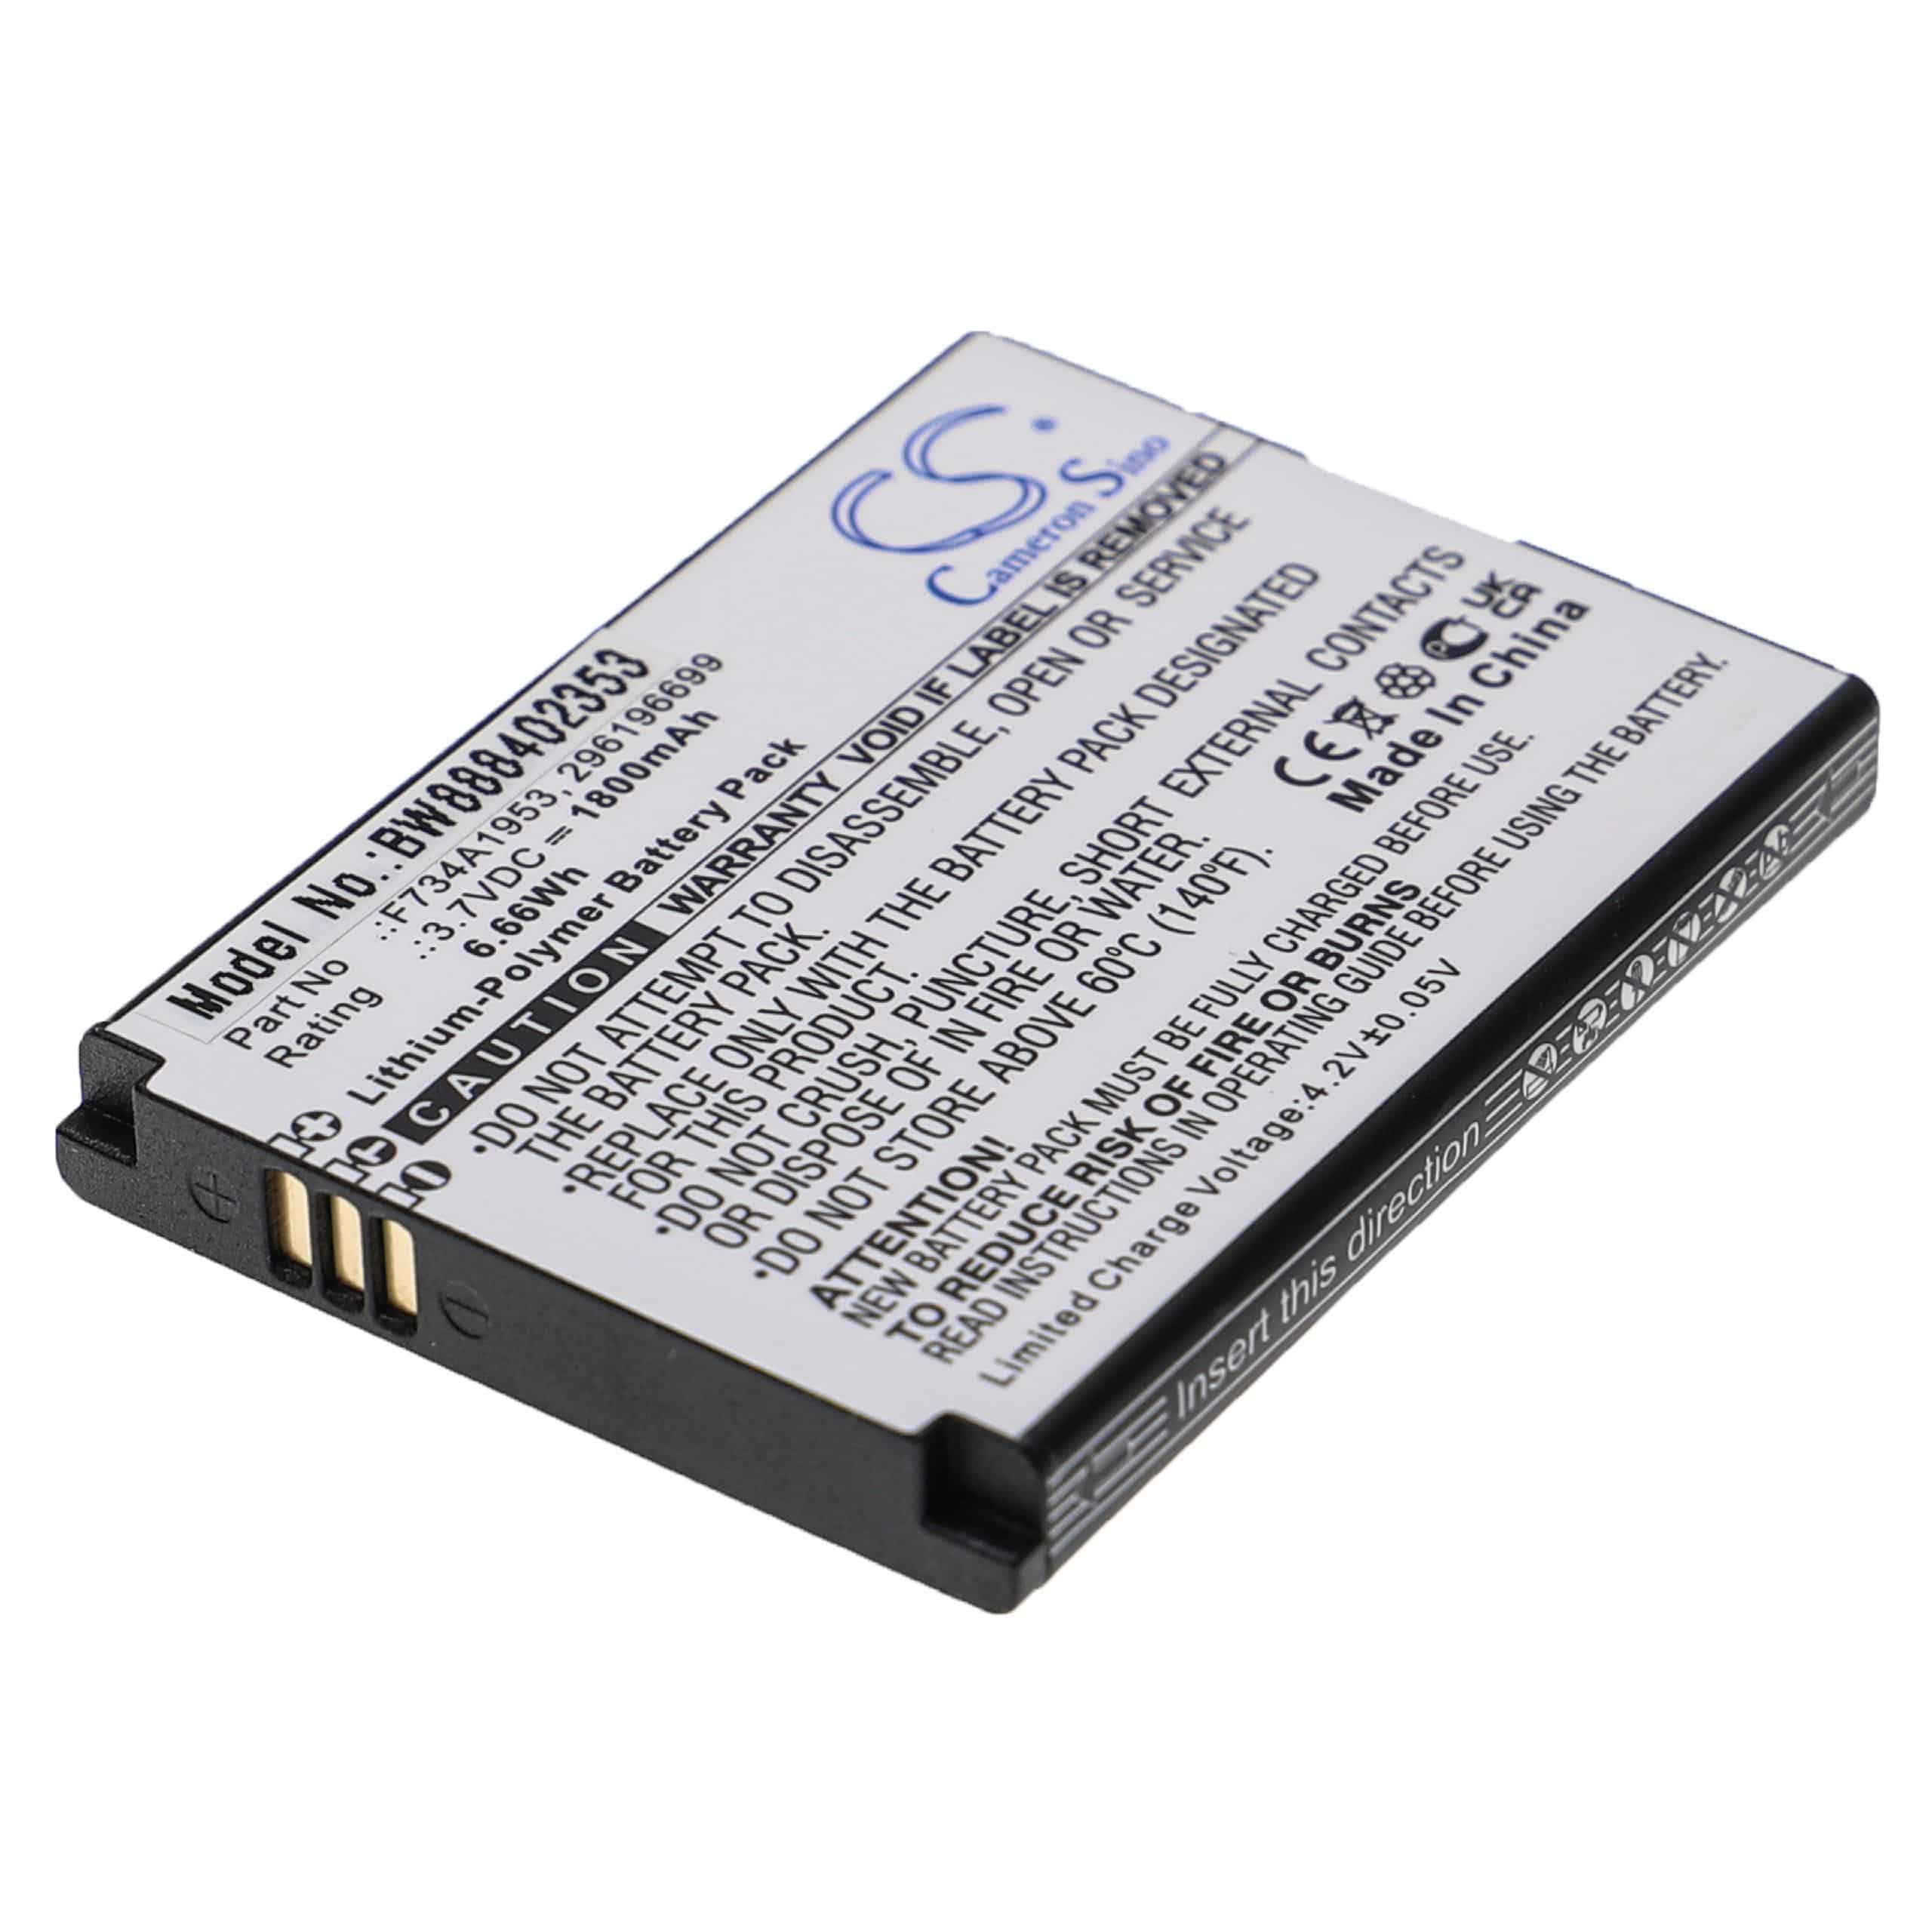 Batería reemplaza Ingenico 296196699, F734A1953 para lector de tarjetas Ingenico - 1800 mAh 3,7 V Li-poli